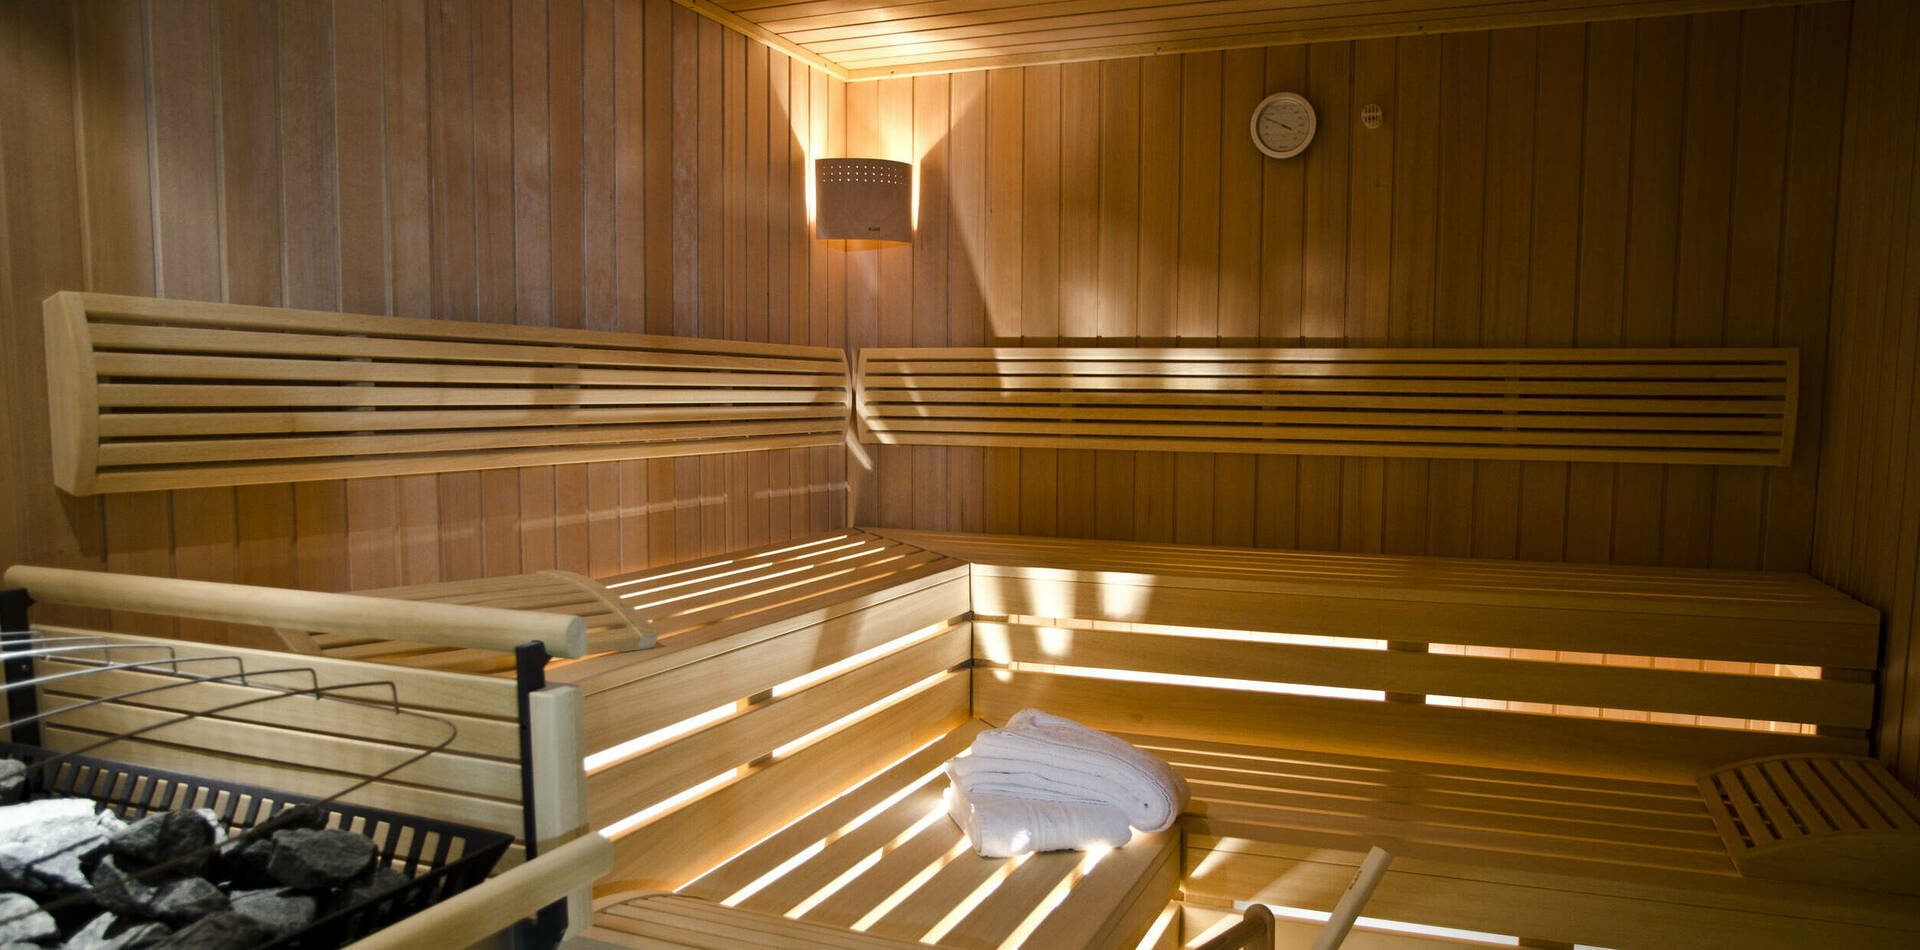 Sauna im Hotel - Garni Arosa in Ischgl 